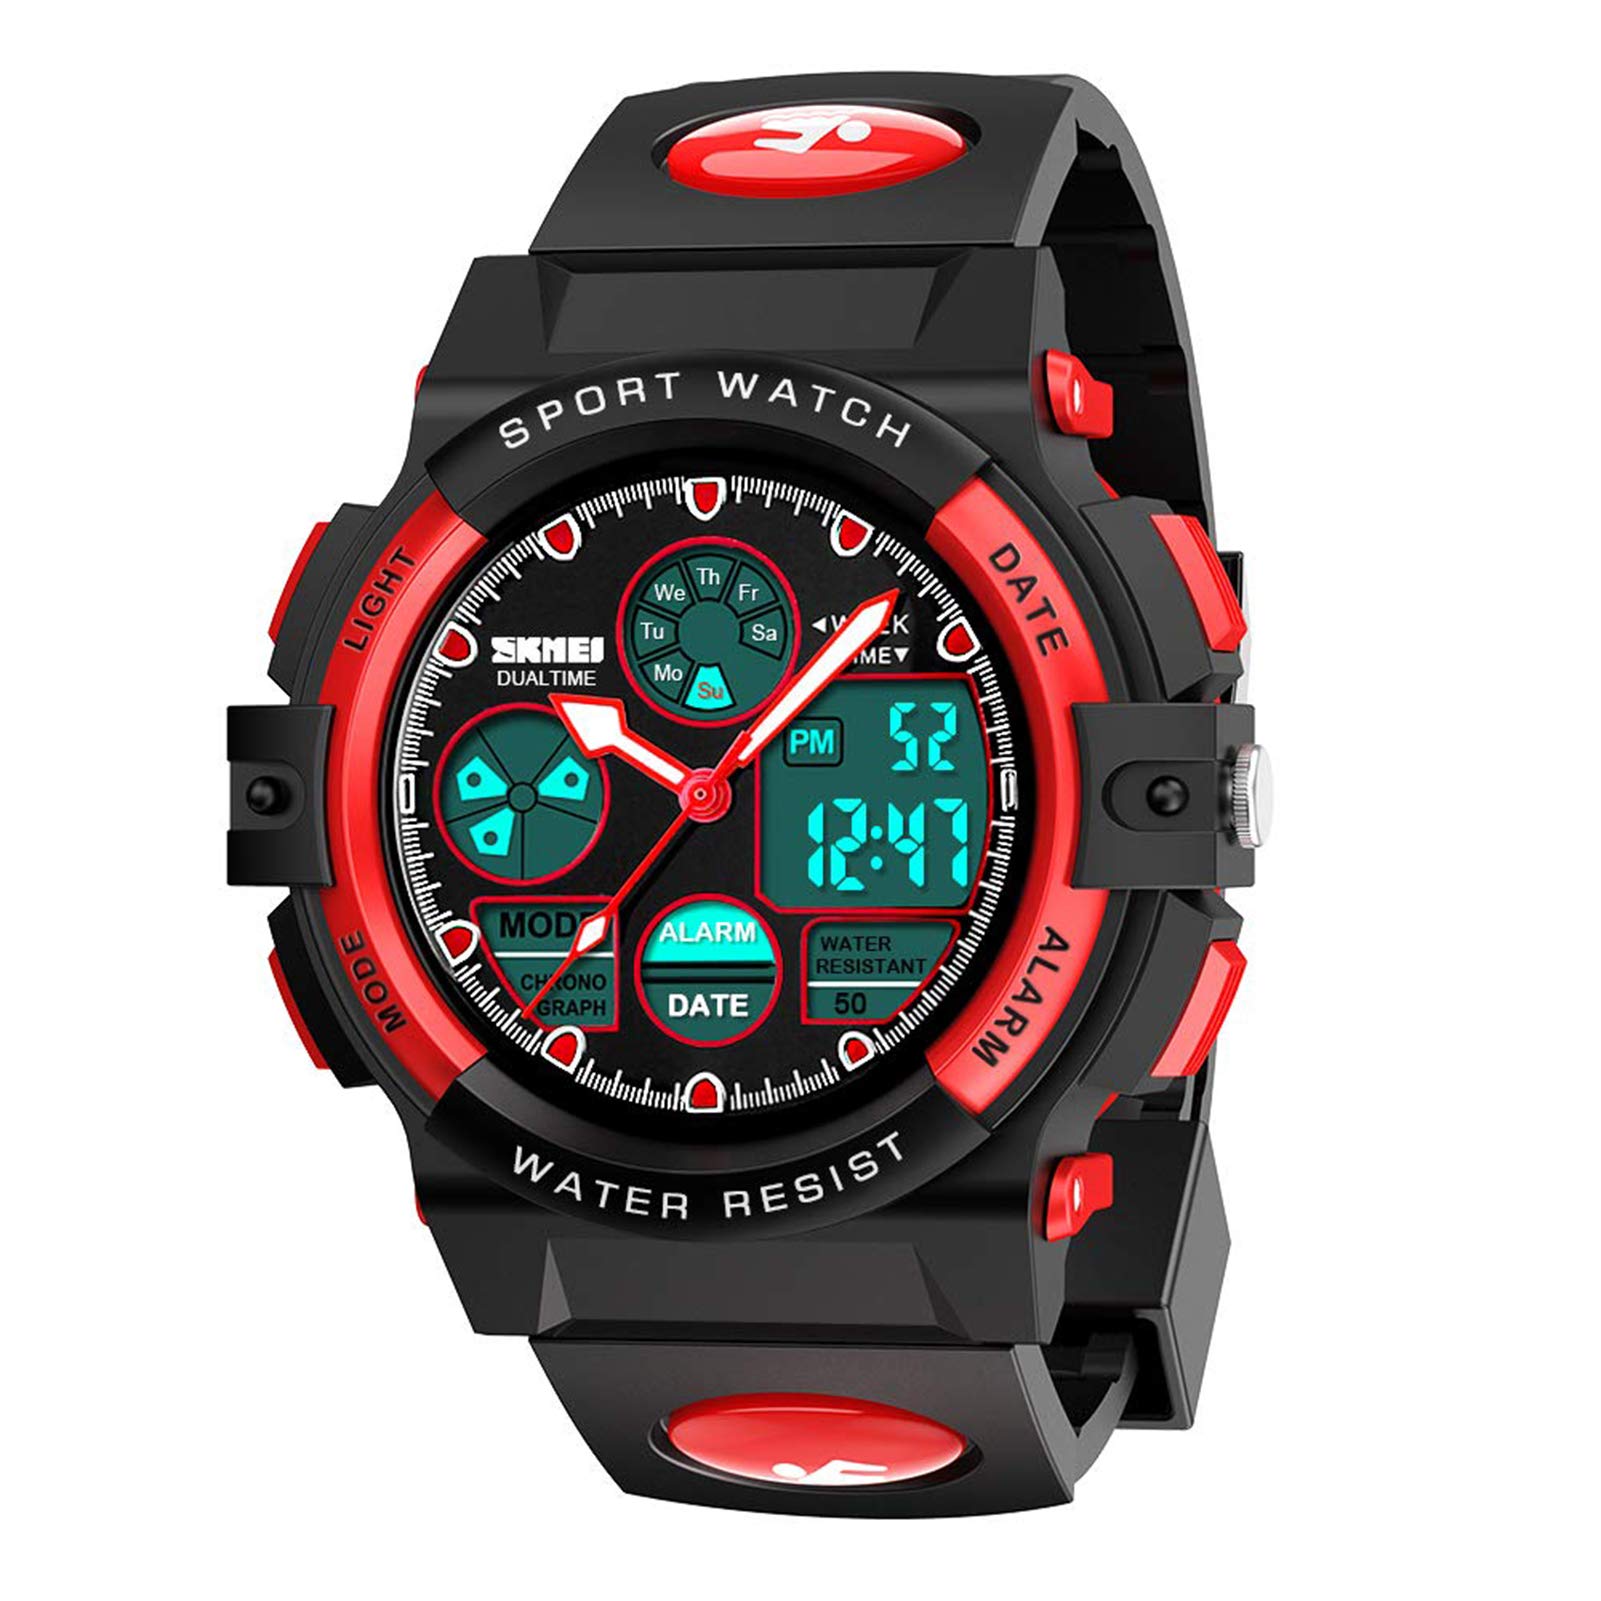 cofuo Kids Digital Sport Watch, Boys Girls Waterproof Sports Outdoor Watches Children Casual Electronic Analog Quartz Wrist Watches with Alarm Stopwatch